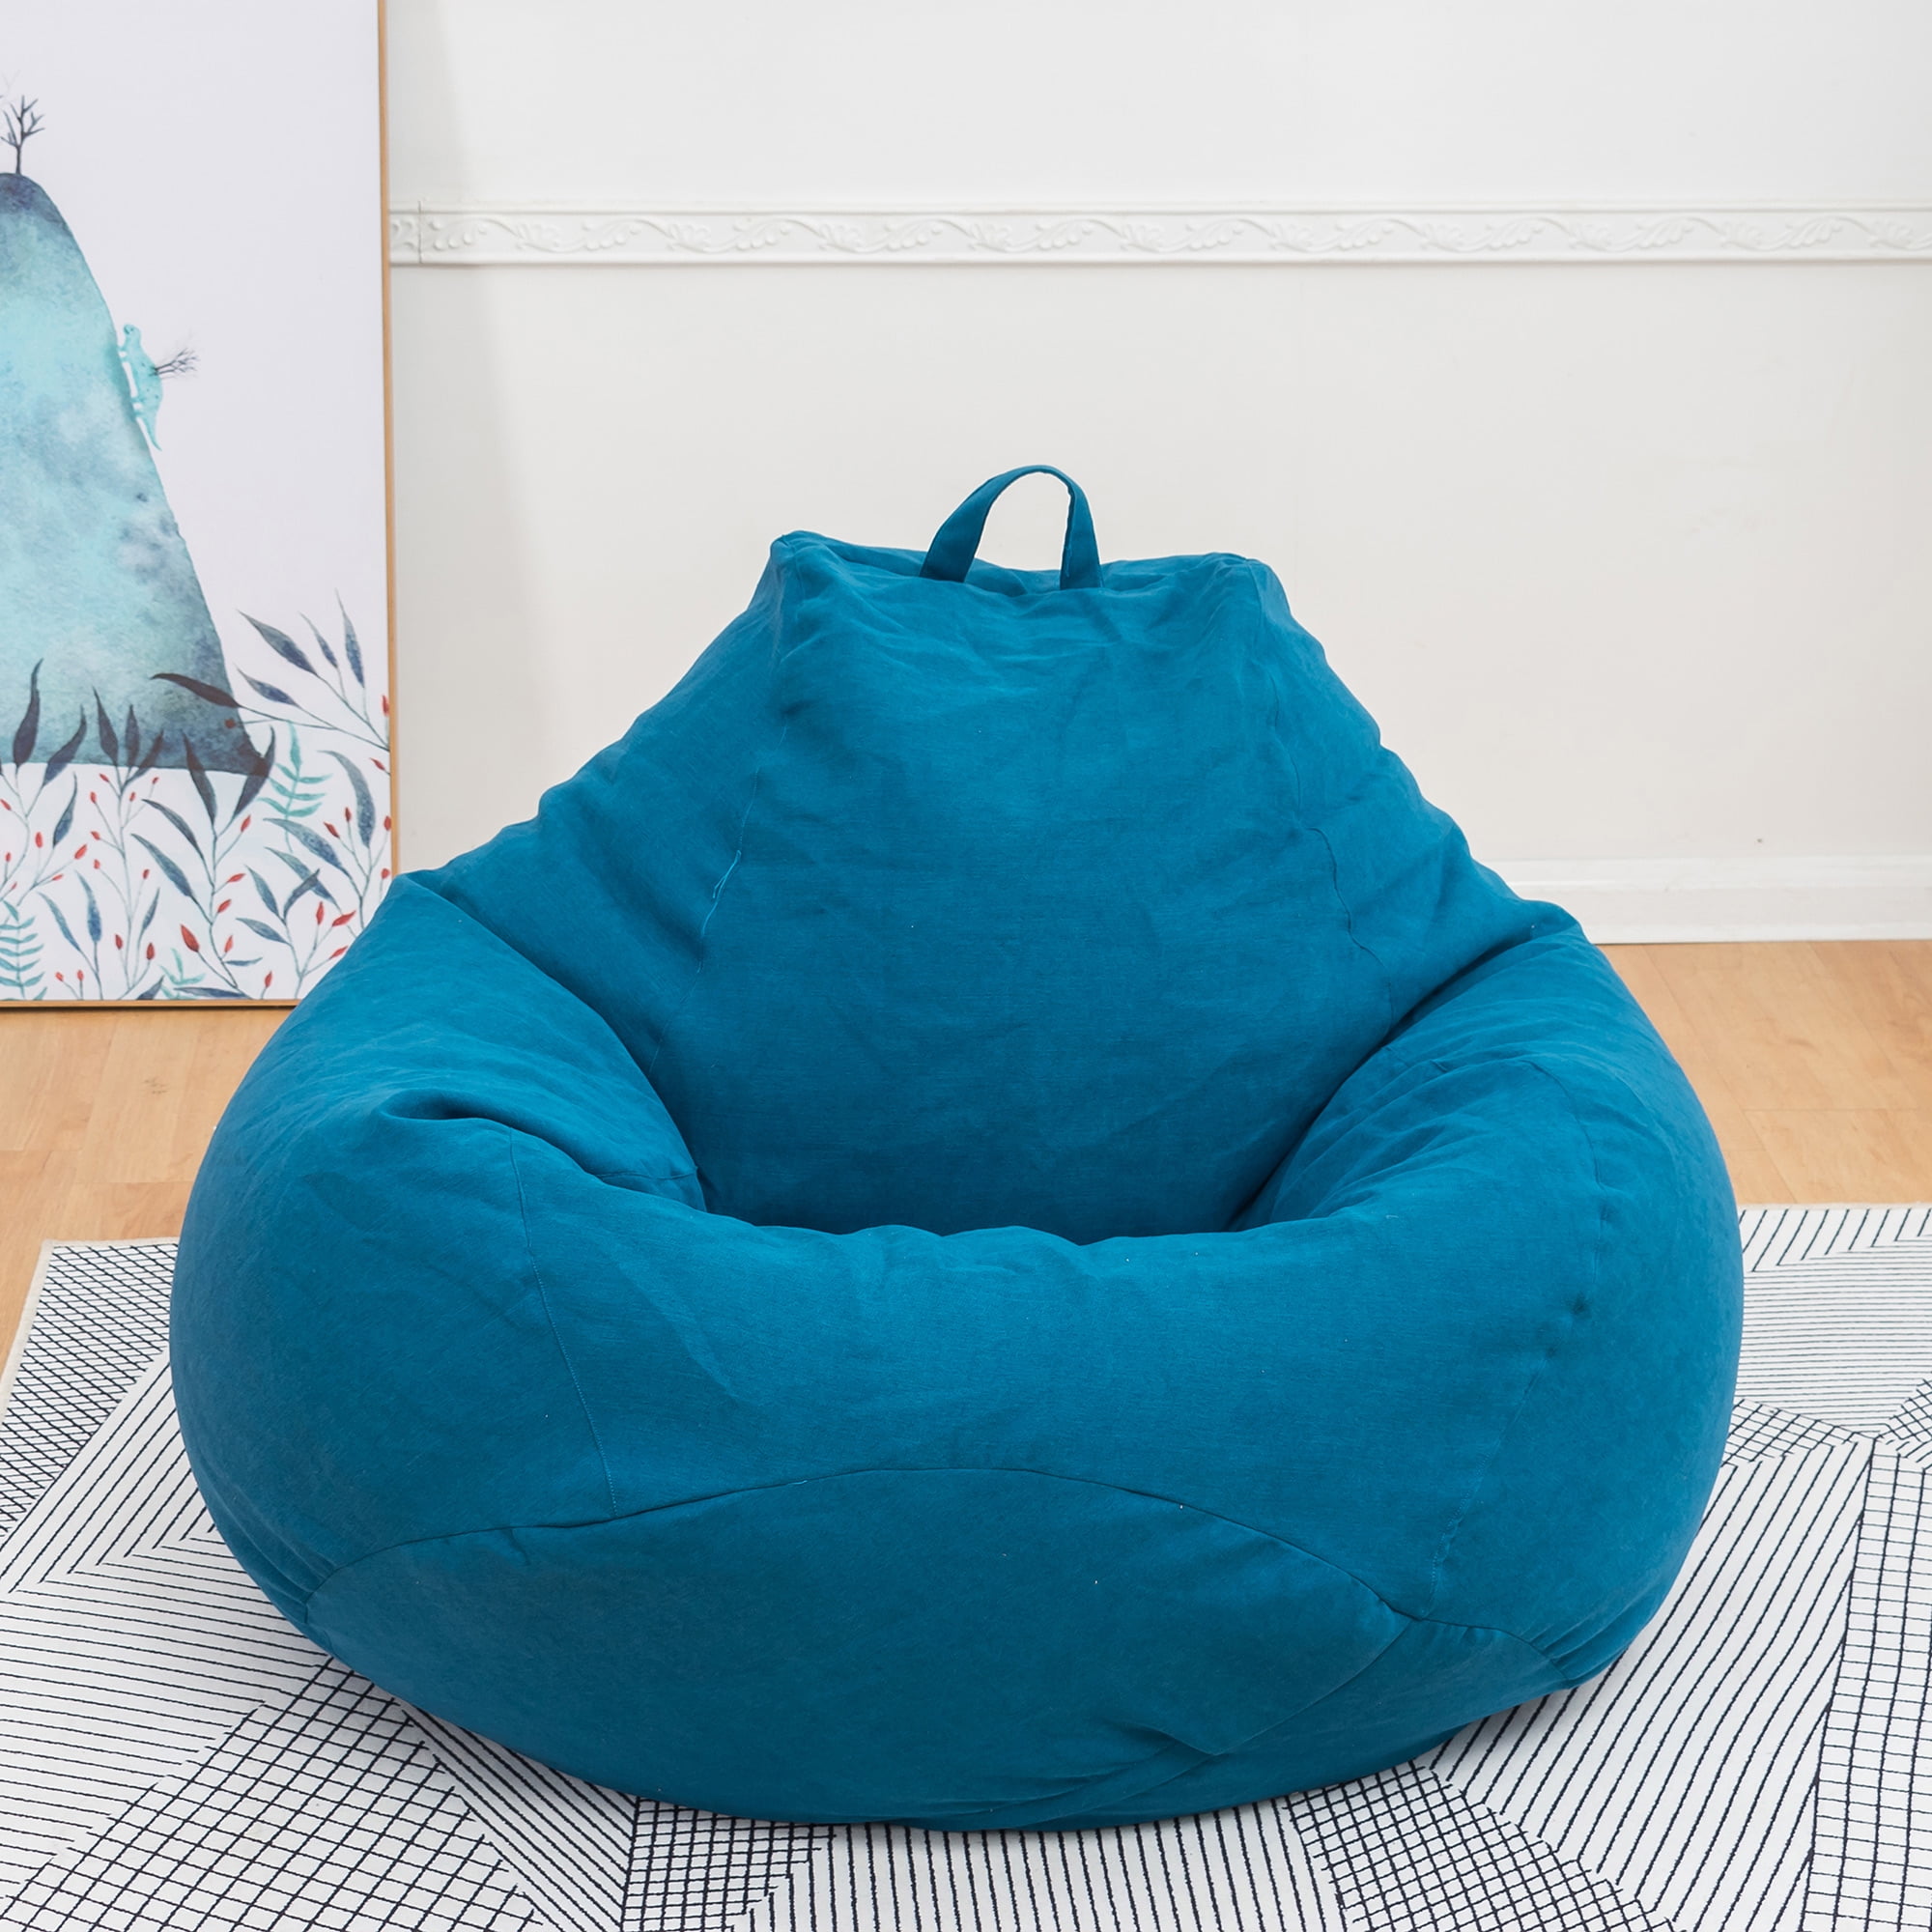 Fantastick Children Creative Stripe Cushion Sofa Large Capacity Storage Bean Bag Chair with Handle Zipper 